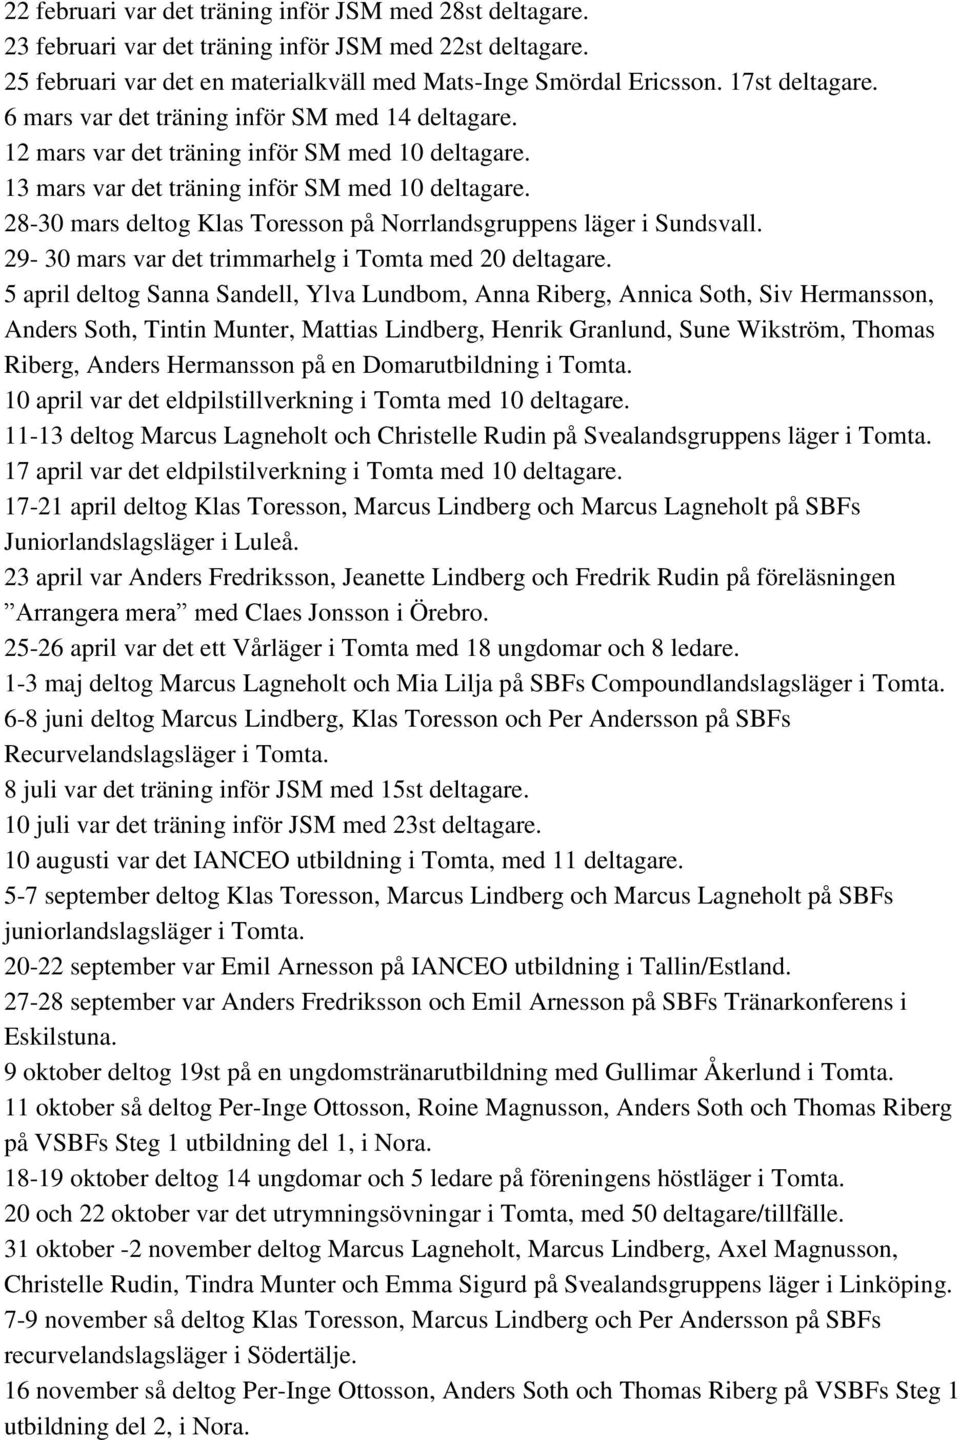 28-30 mars deltog Klas Toresson på Norrlandsgruppens läger i Sundsvall. 29-30 mars var det trimmarhelg i Tomta med 20 deltagare.